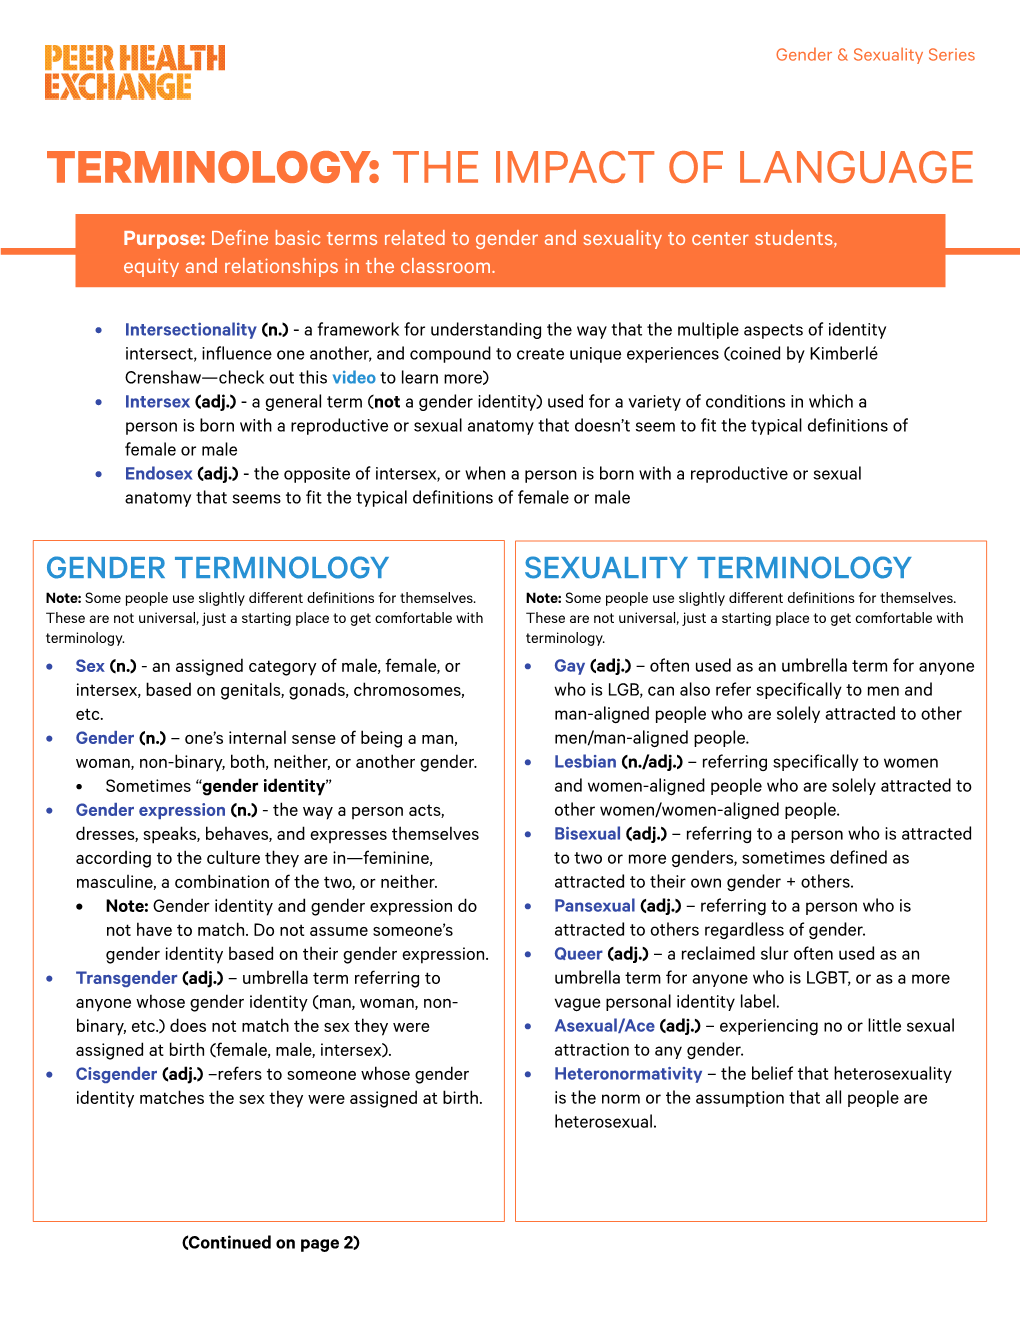 Terminology: the Impact of Language